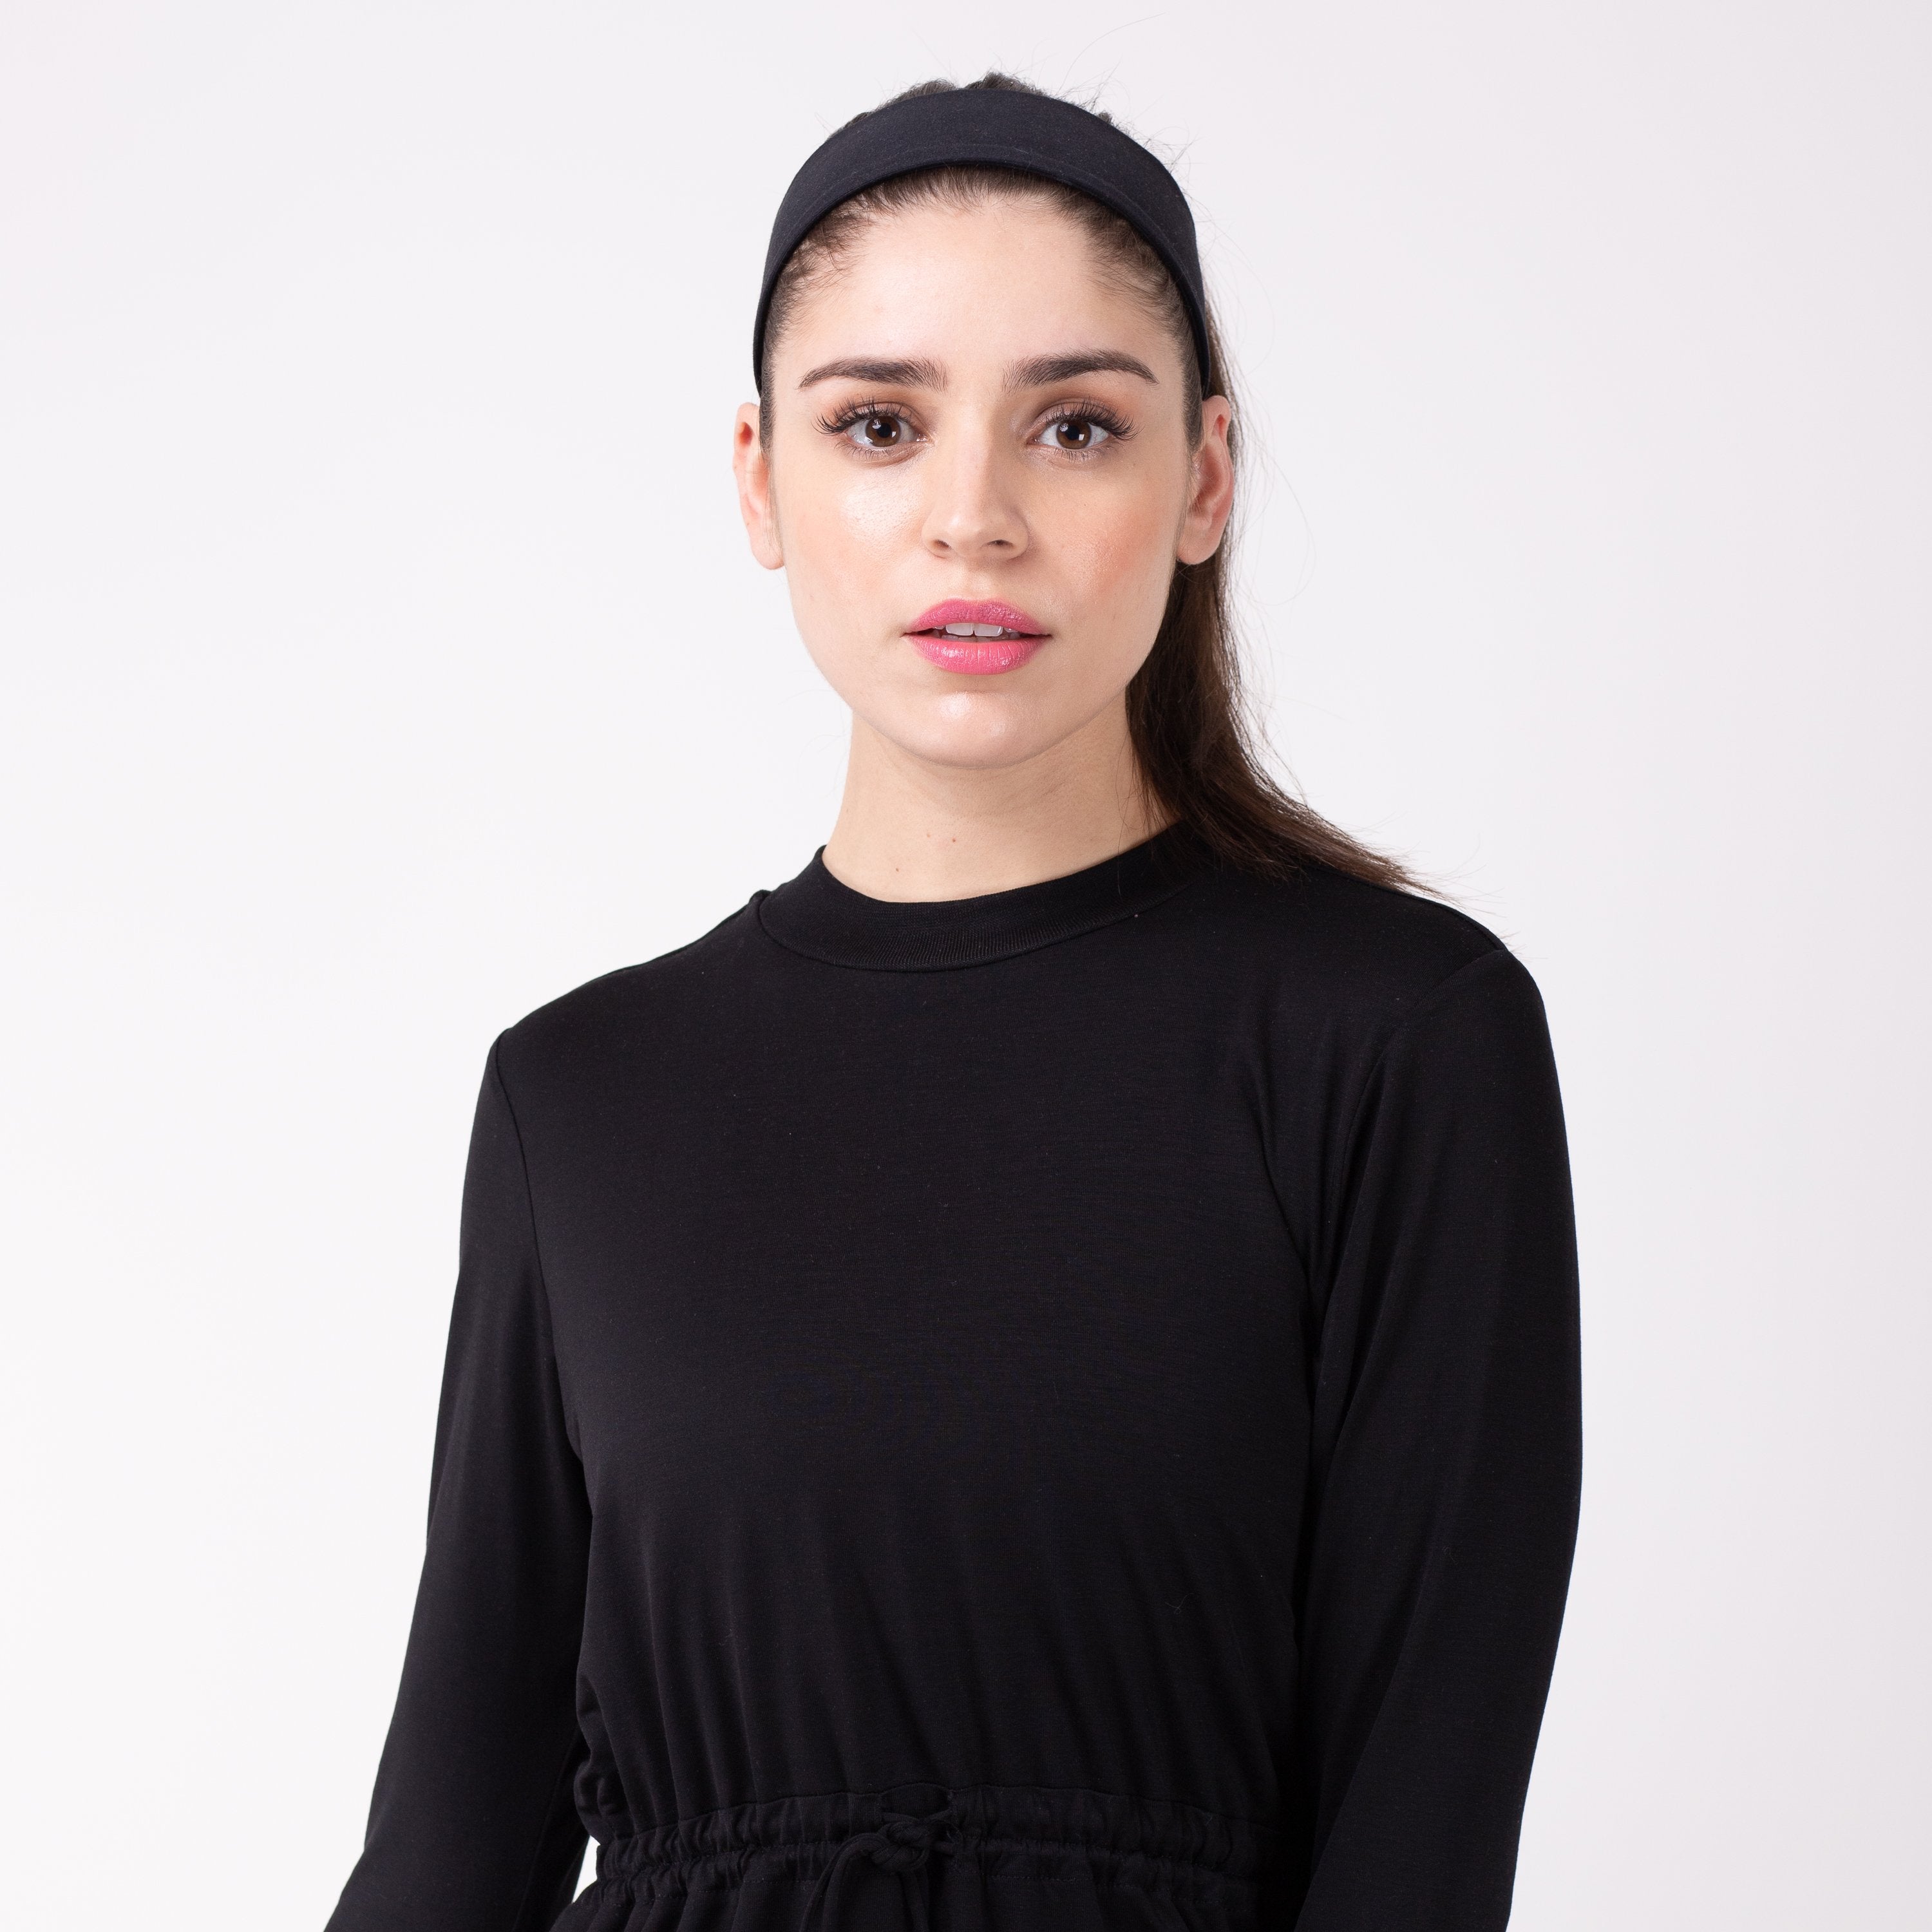 Woman in black shirt with matching black HAWA headband.